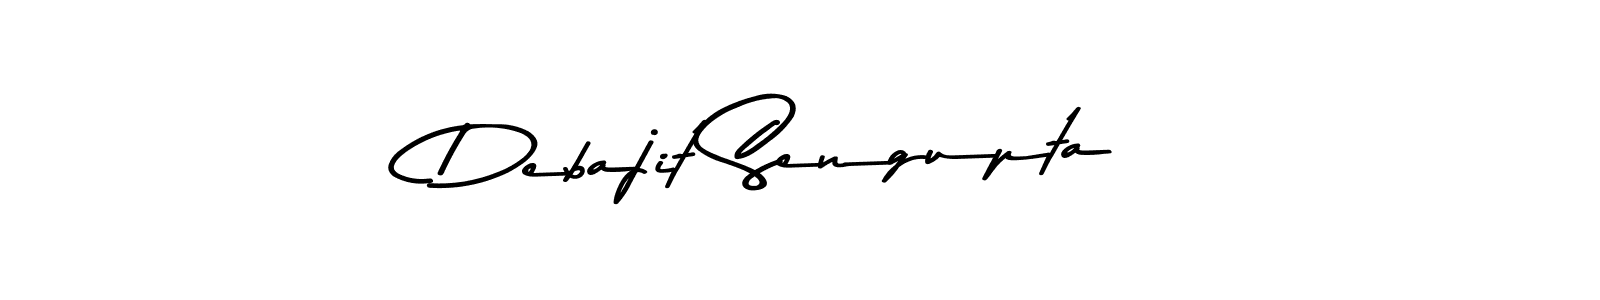 How to Draw Debajit Sengupta signature style? Asem Kandis PERSONAL USE is a latest design signature styles for name Debajit Sengupta. Debajit Sengupta signature style 9 images and pictures png